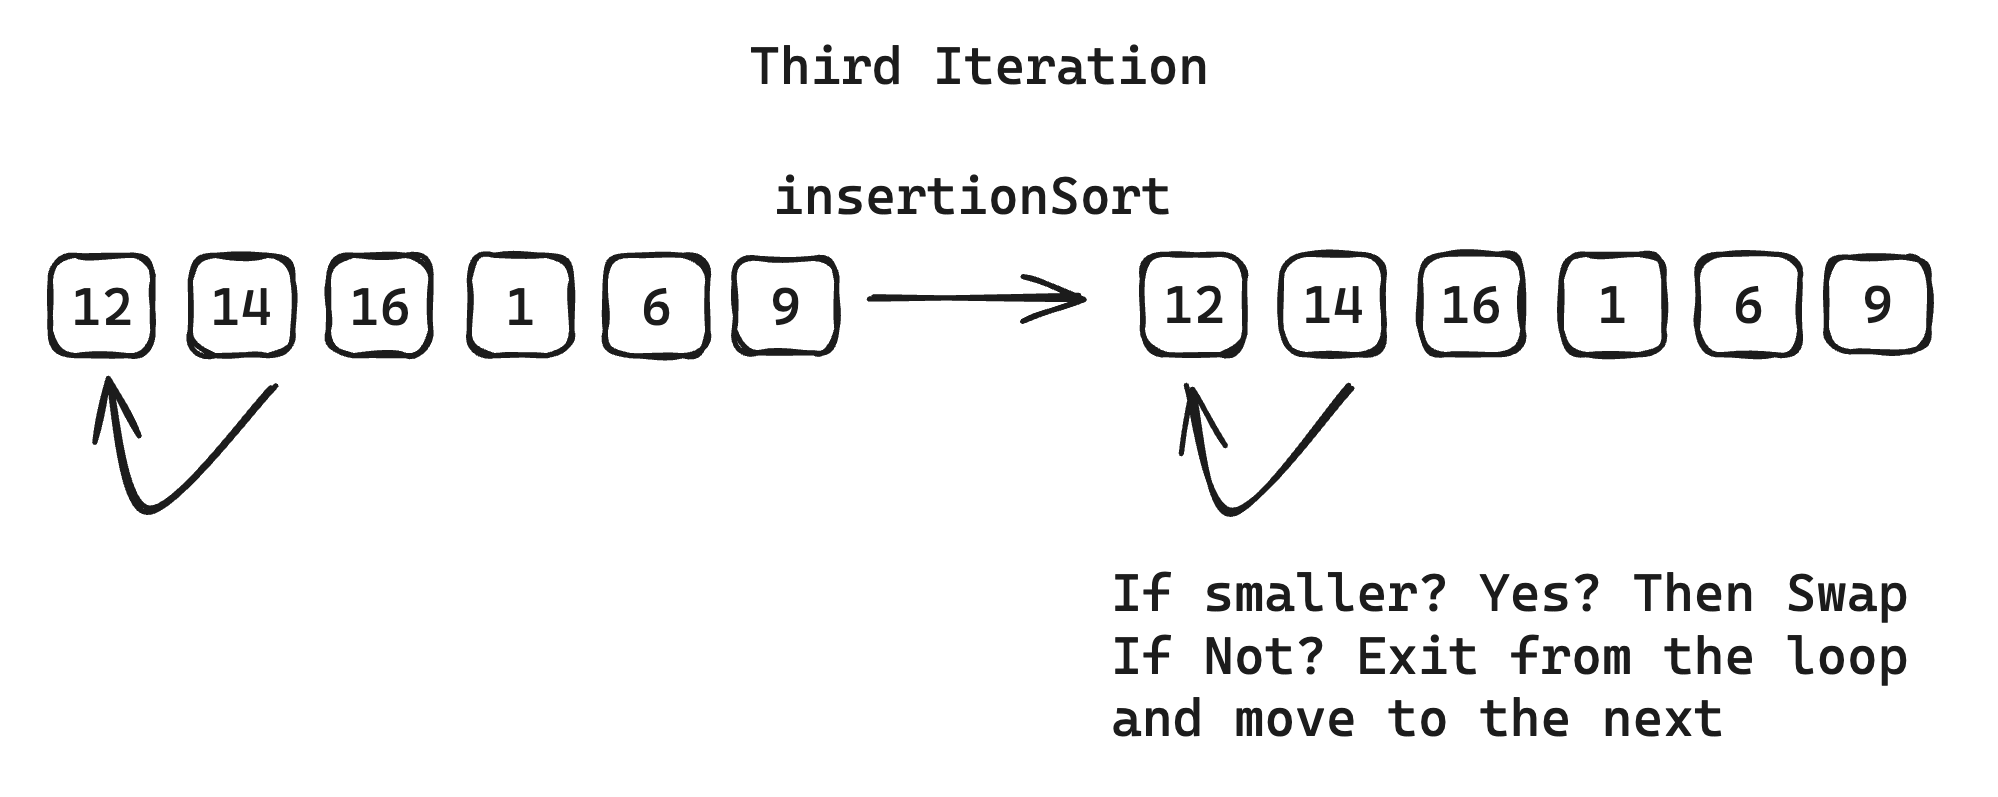 Insertion Sort Third Iteration